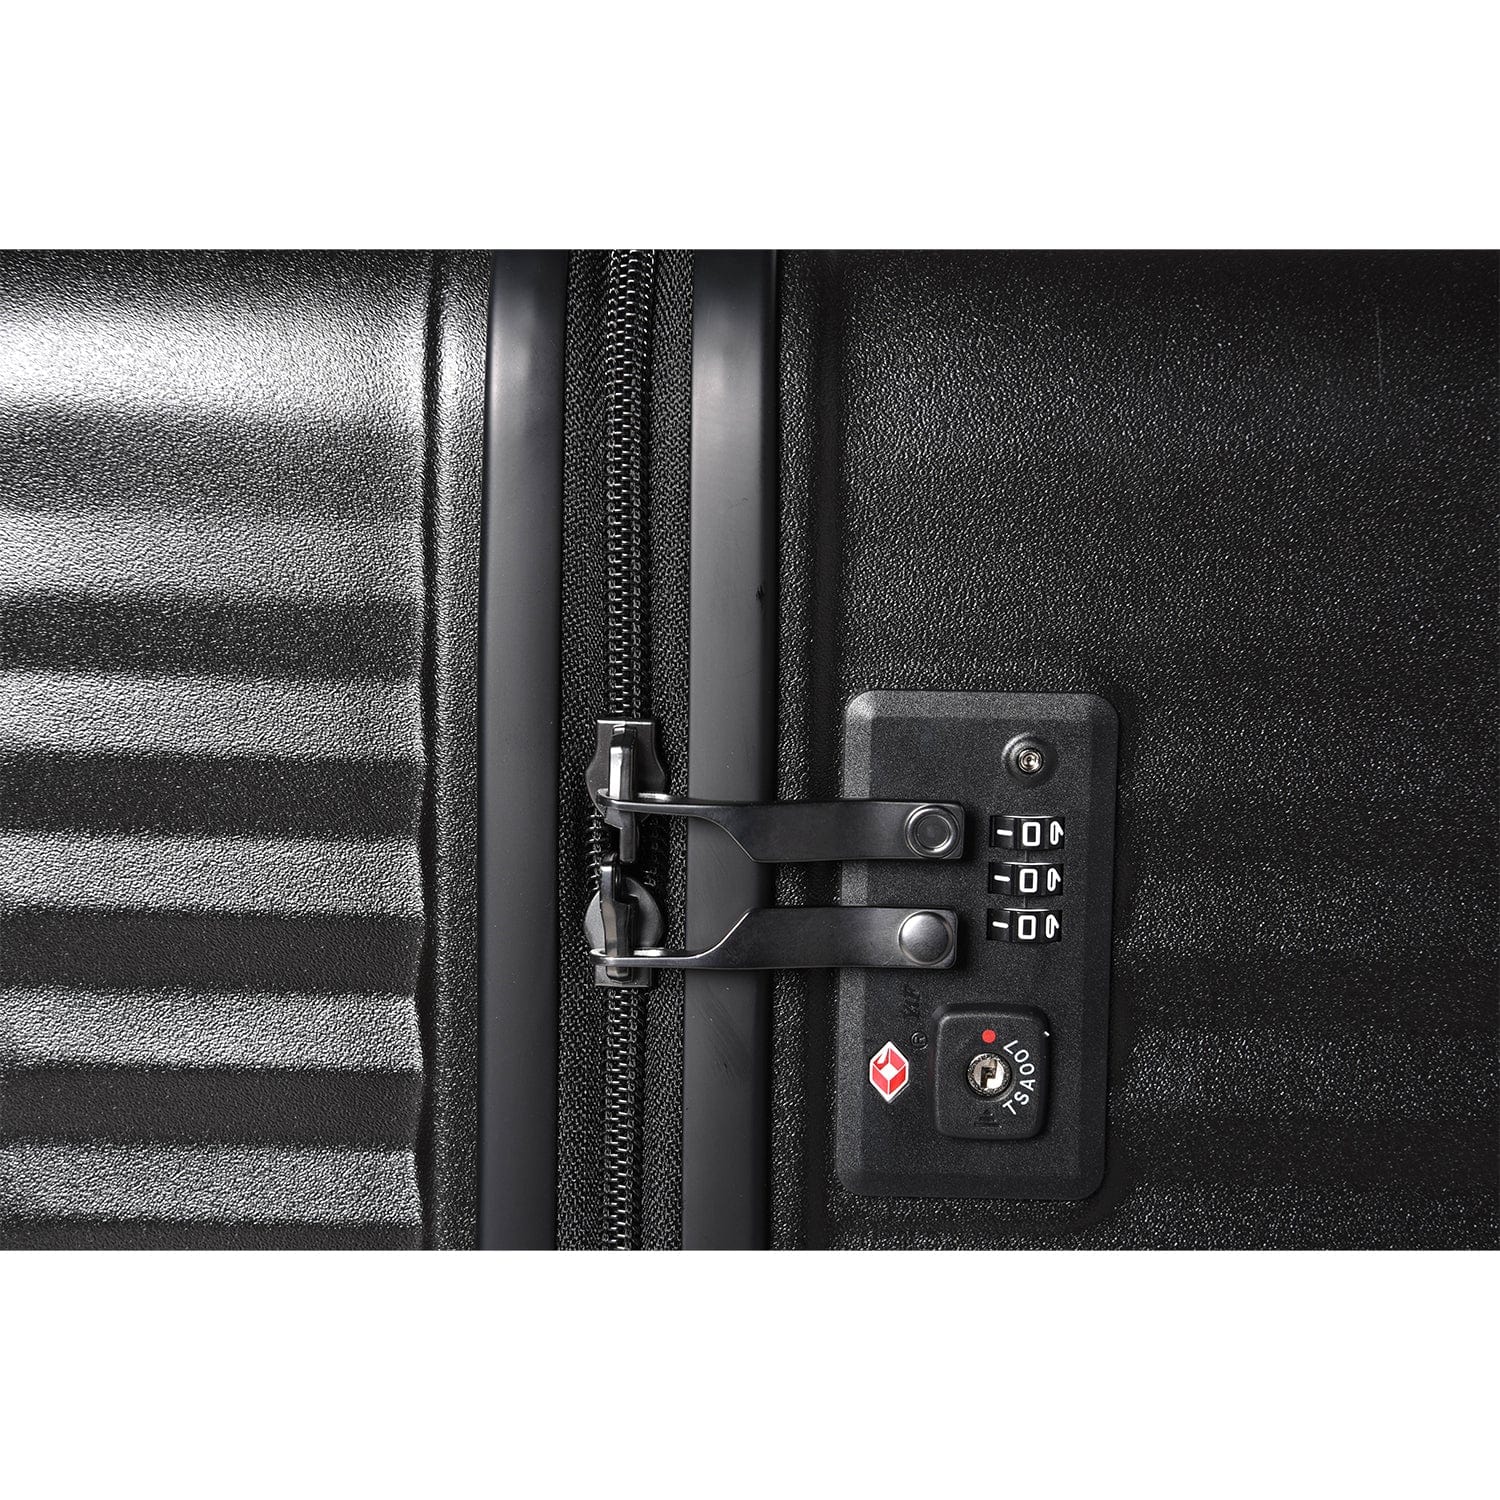 Echolac Celestra 75cm Hardcase Non-Expandable 4 Double Wheel Check-In Luggage Trolley Black - PC183K